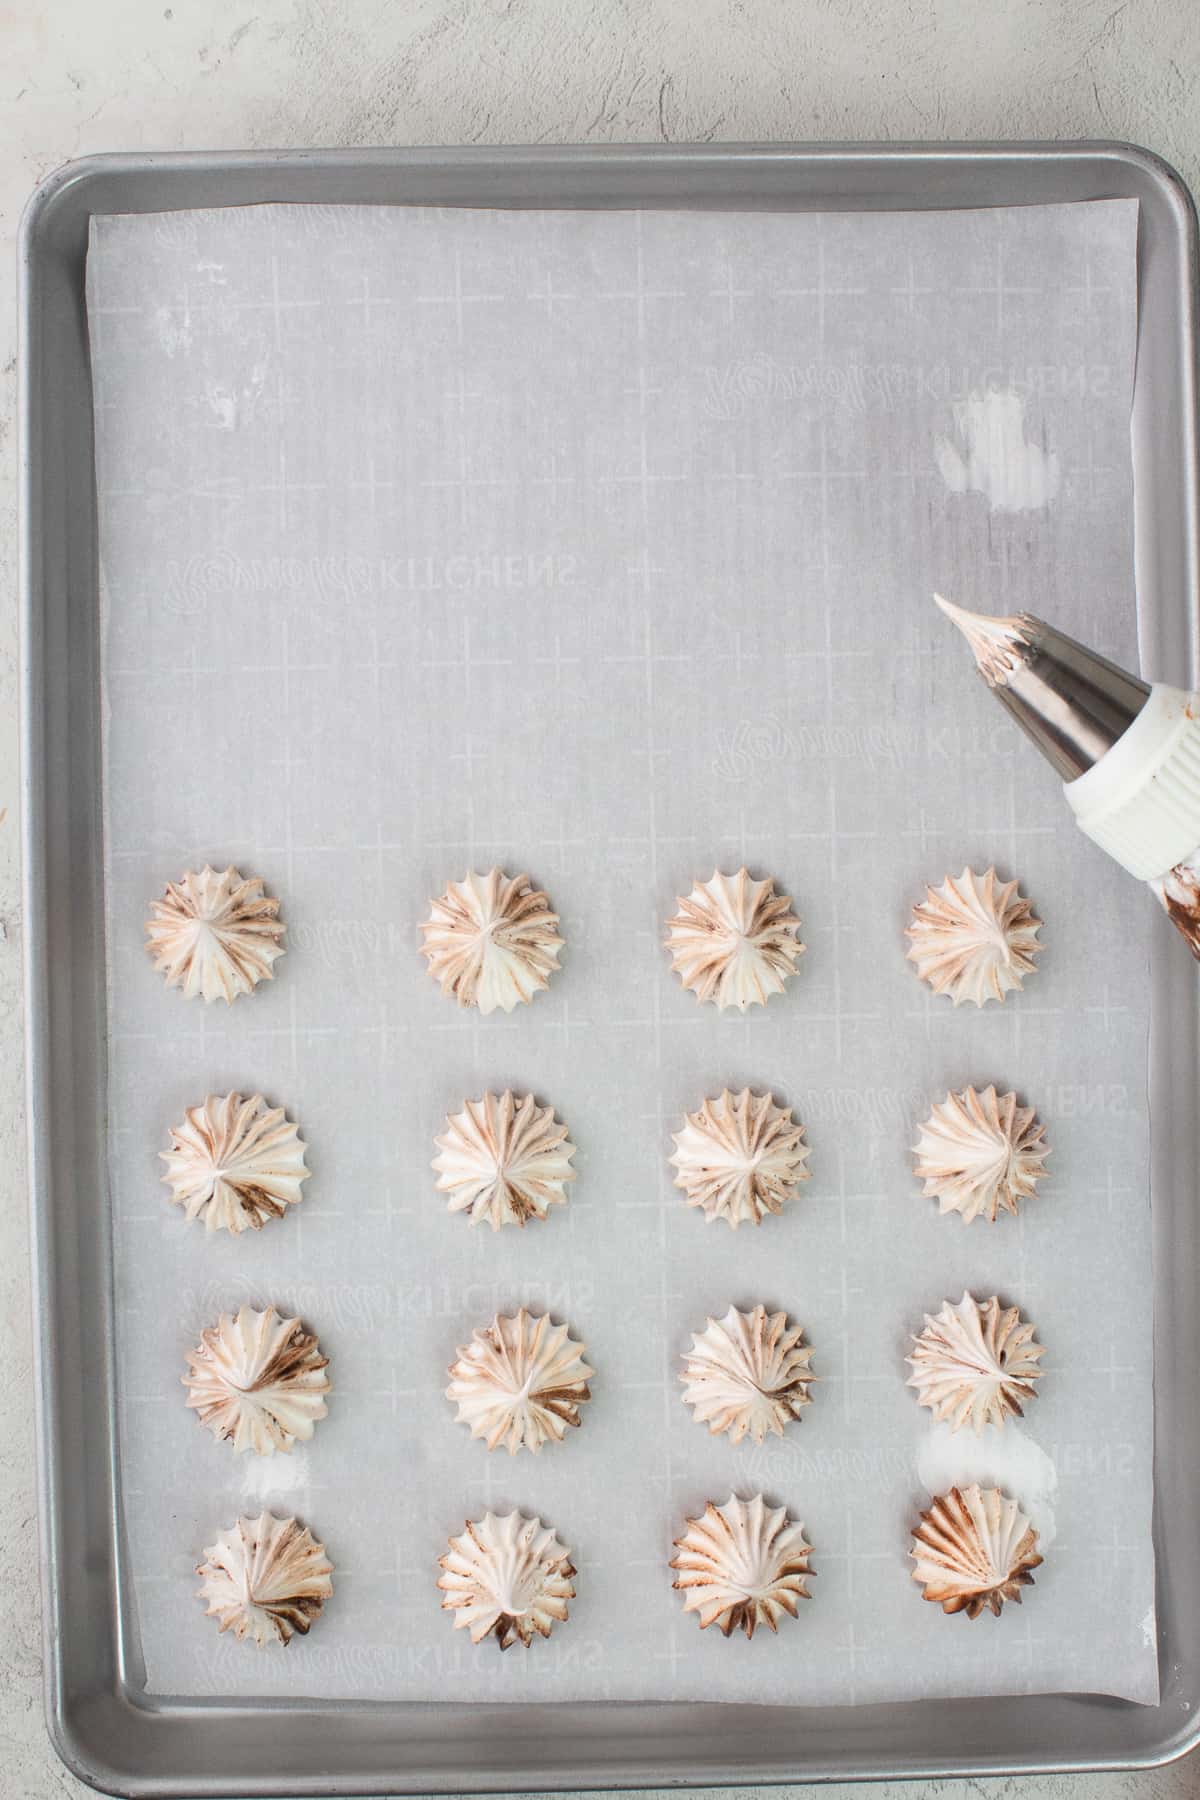 Piped meringue on baking sheet